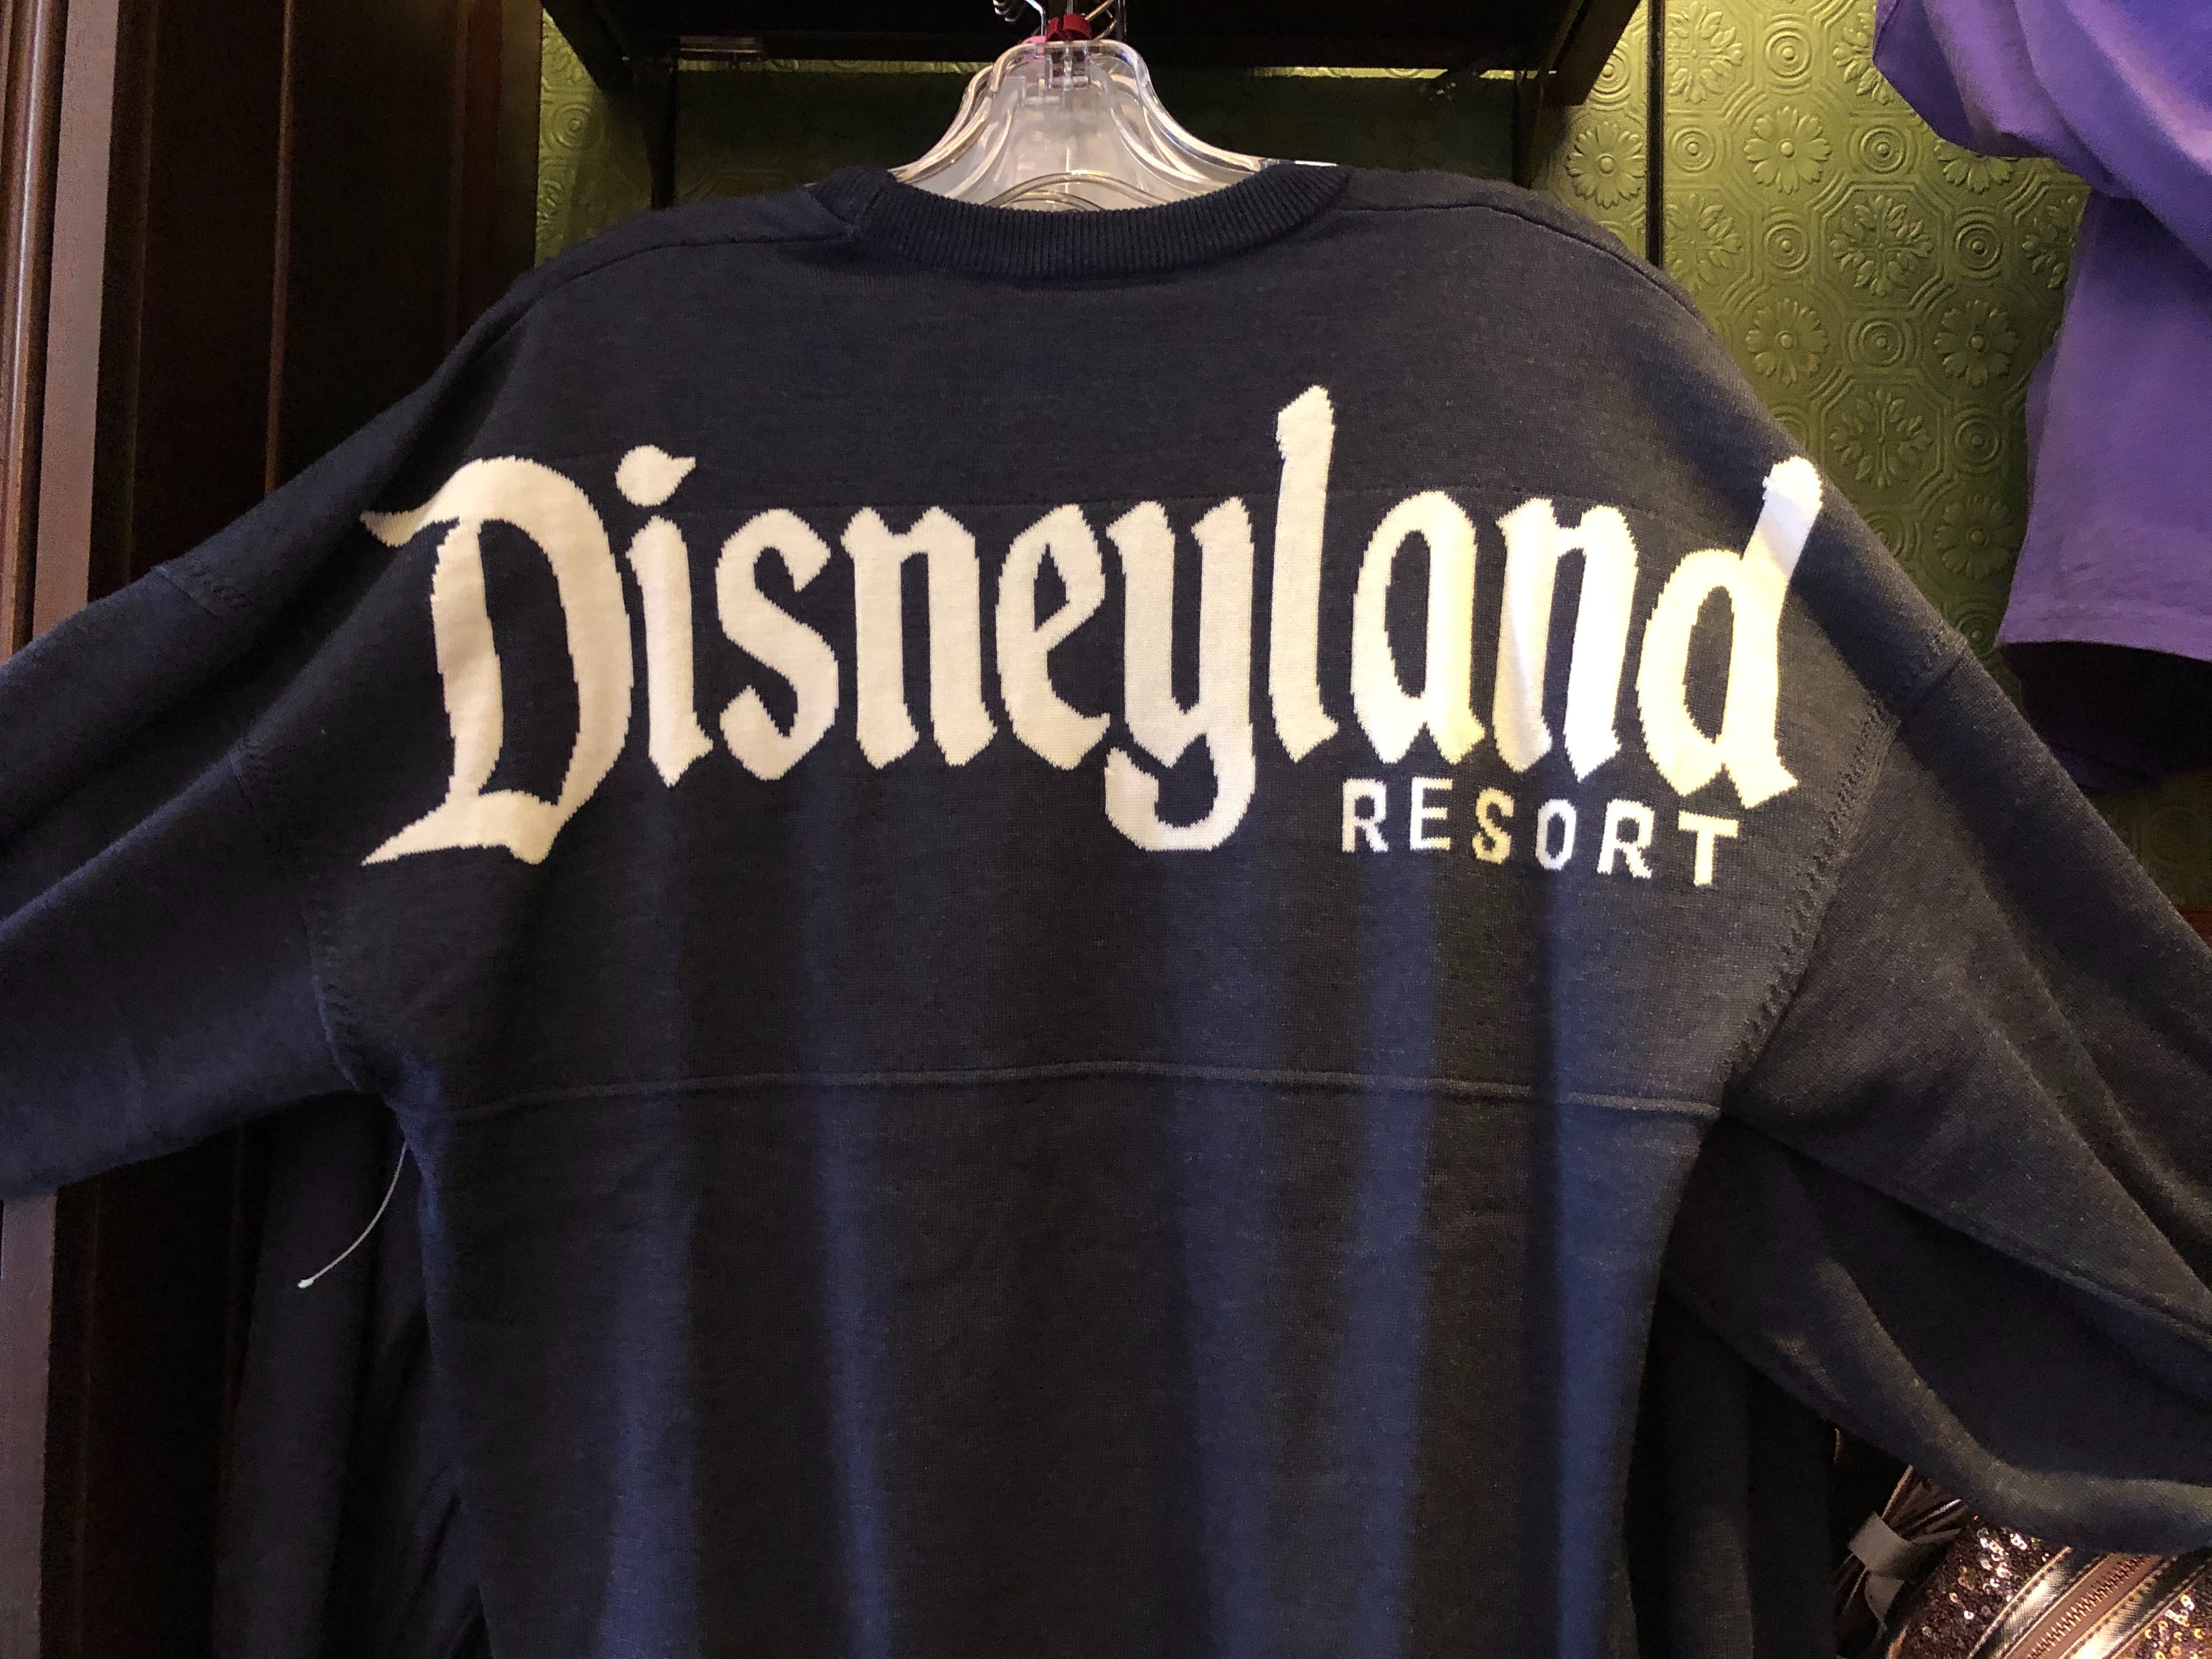 PHOTOS New Knitted Spirit Jersey Sweater Arrives at Disneyland Resort